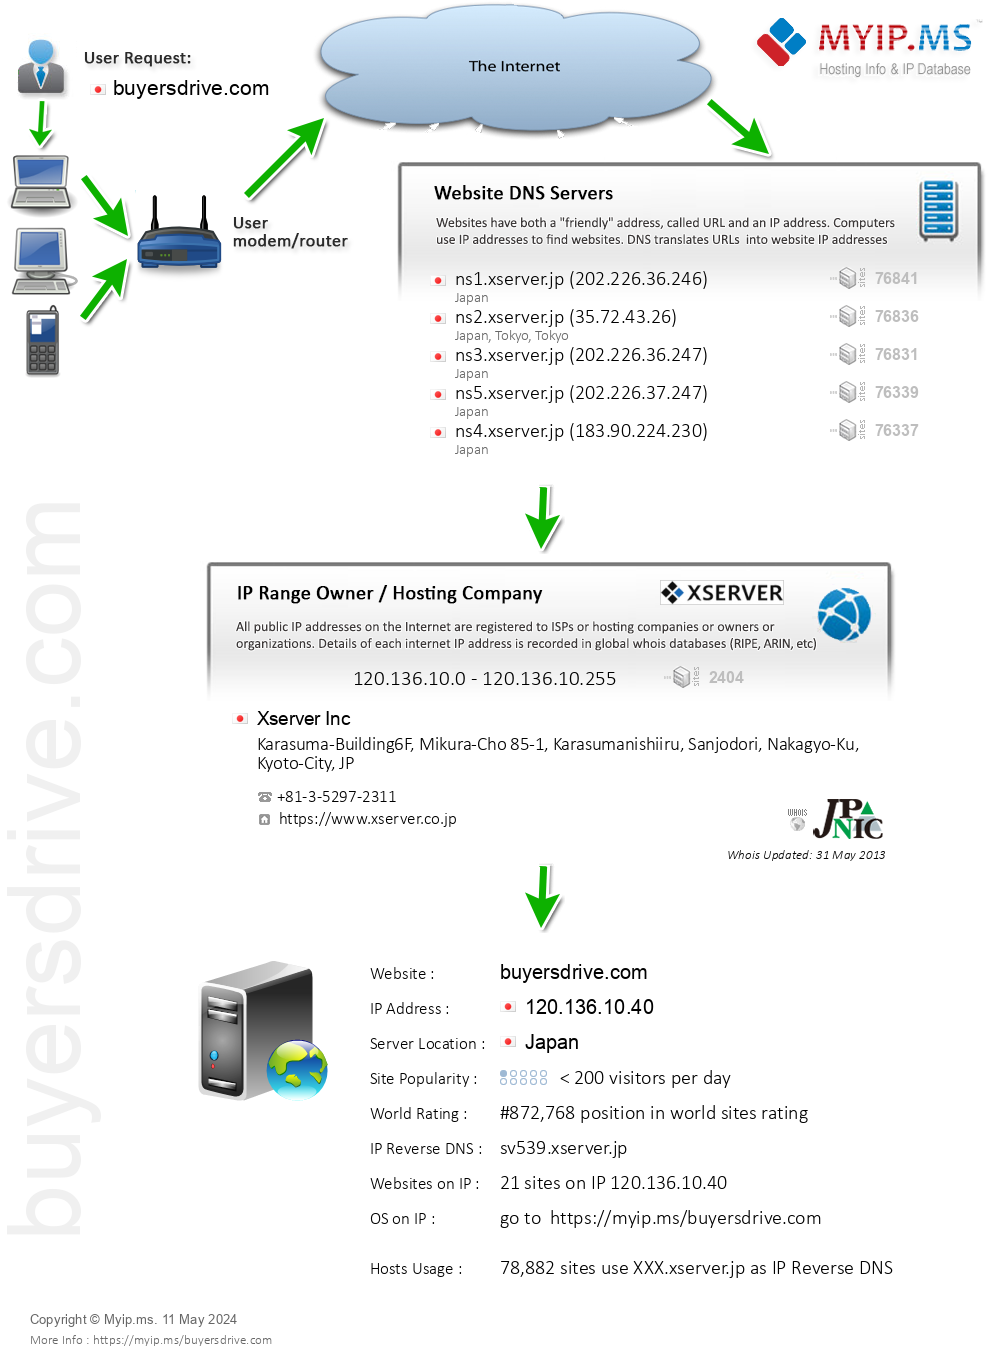 Buyersdrive.com - Website Hosting Visual IP Diagram